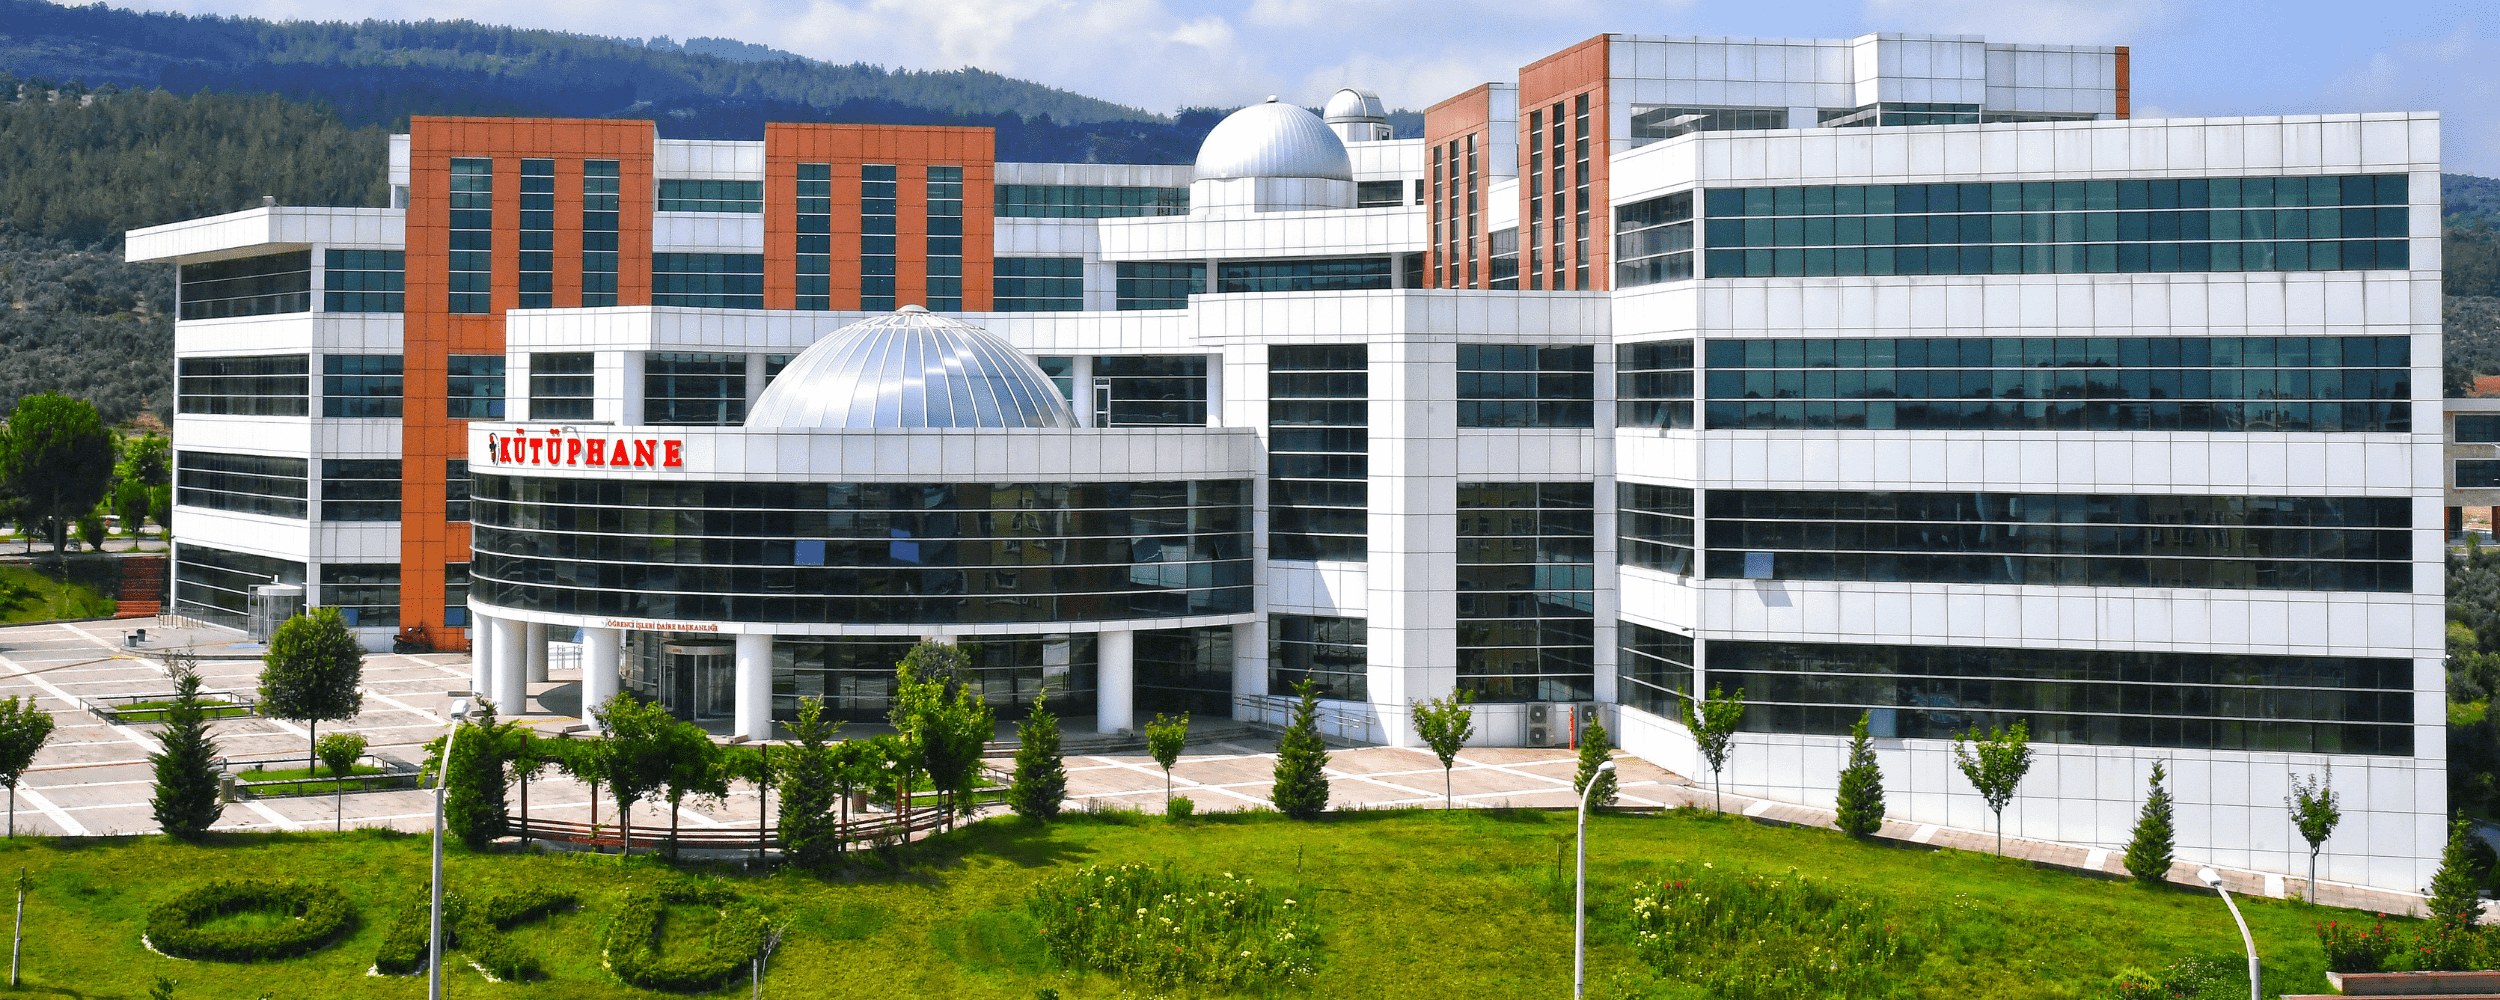 osmaniy universitesi find and study 2 - Osmaniye Korkut Ata Üniversitesi